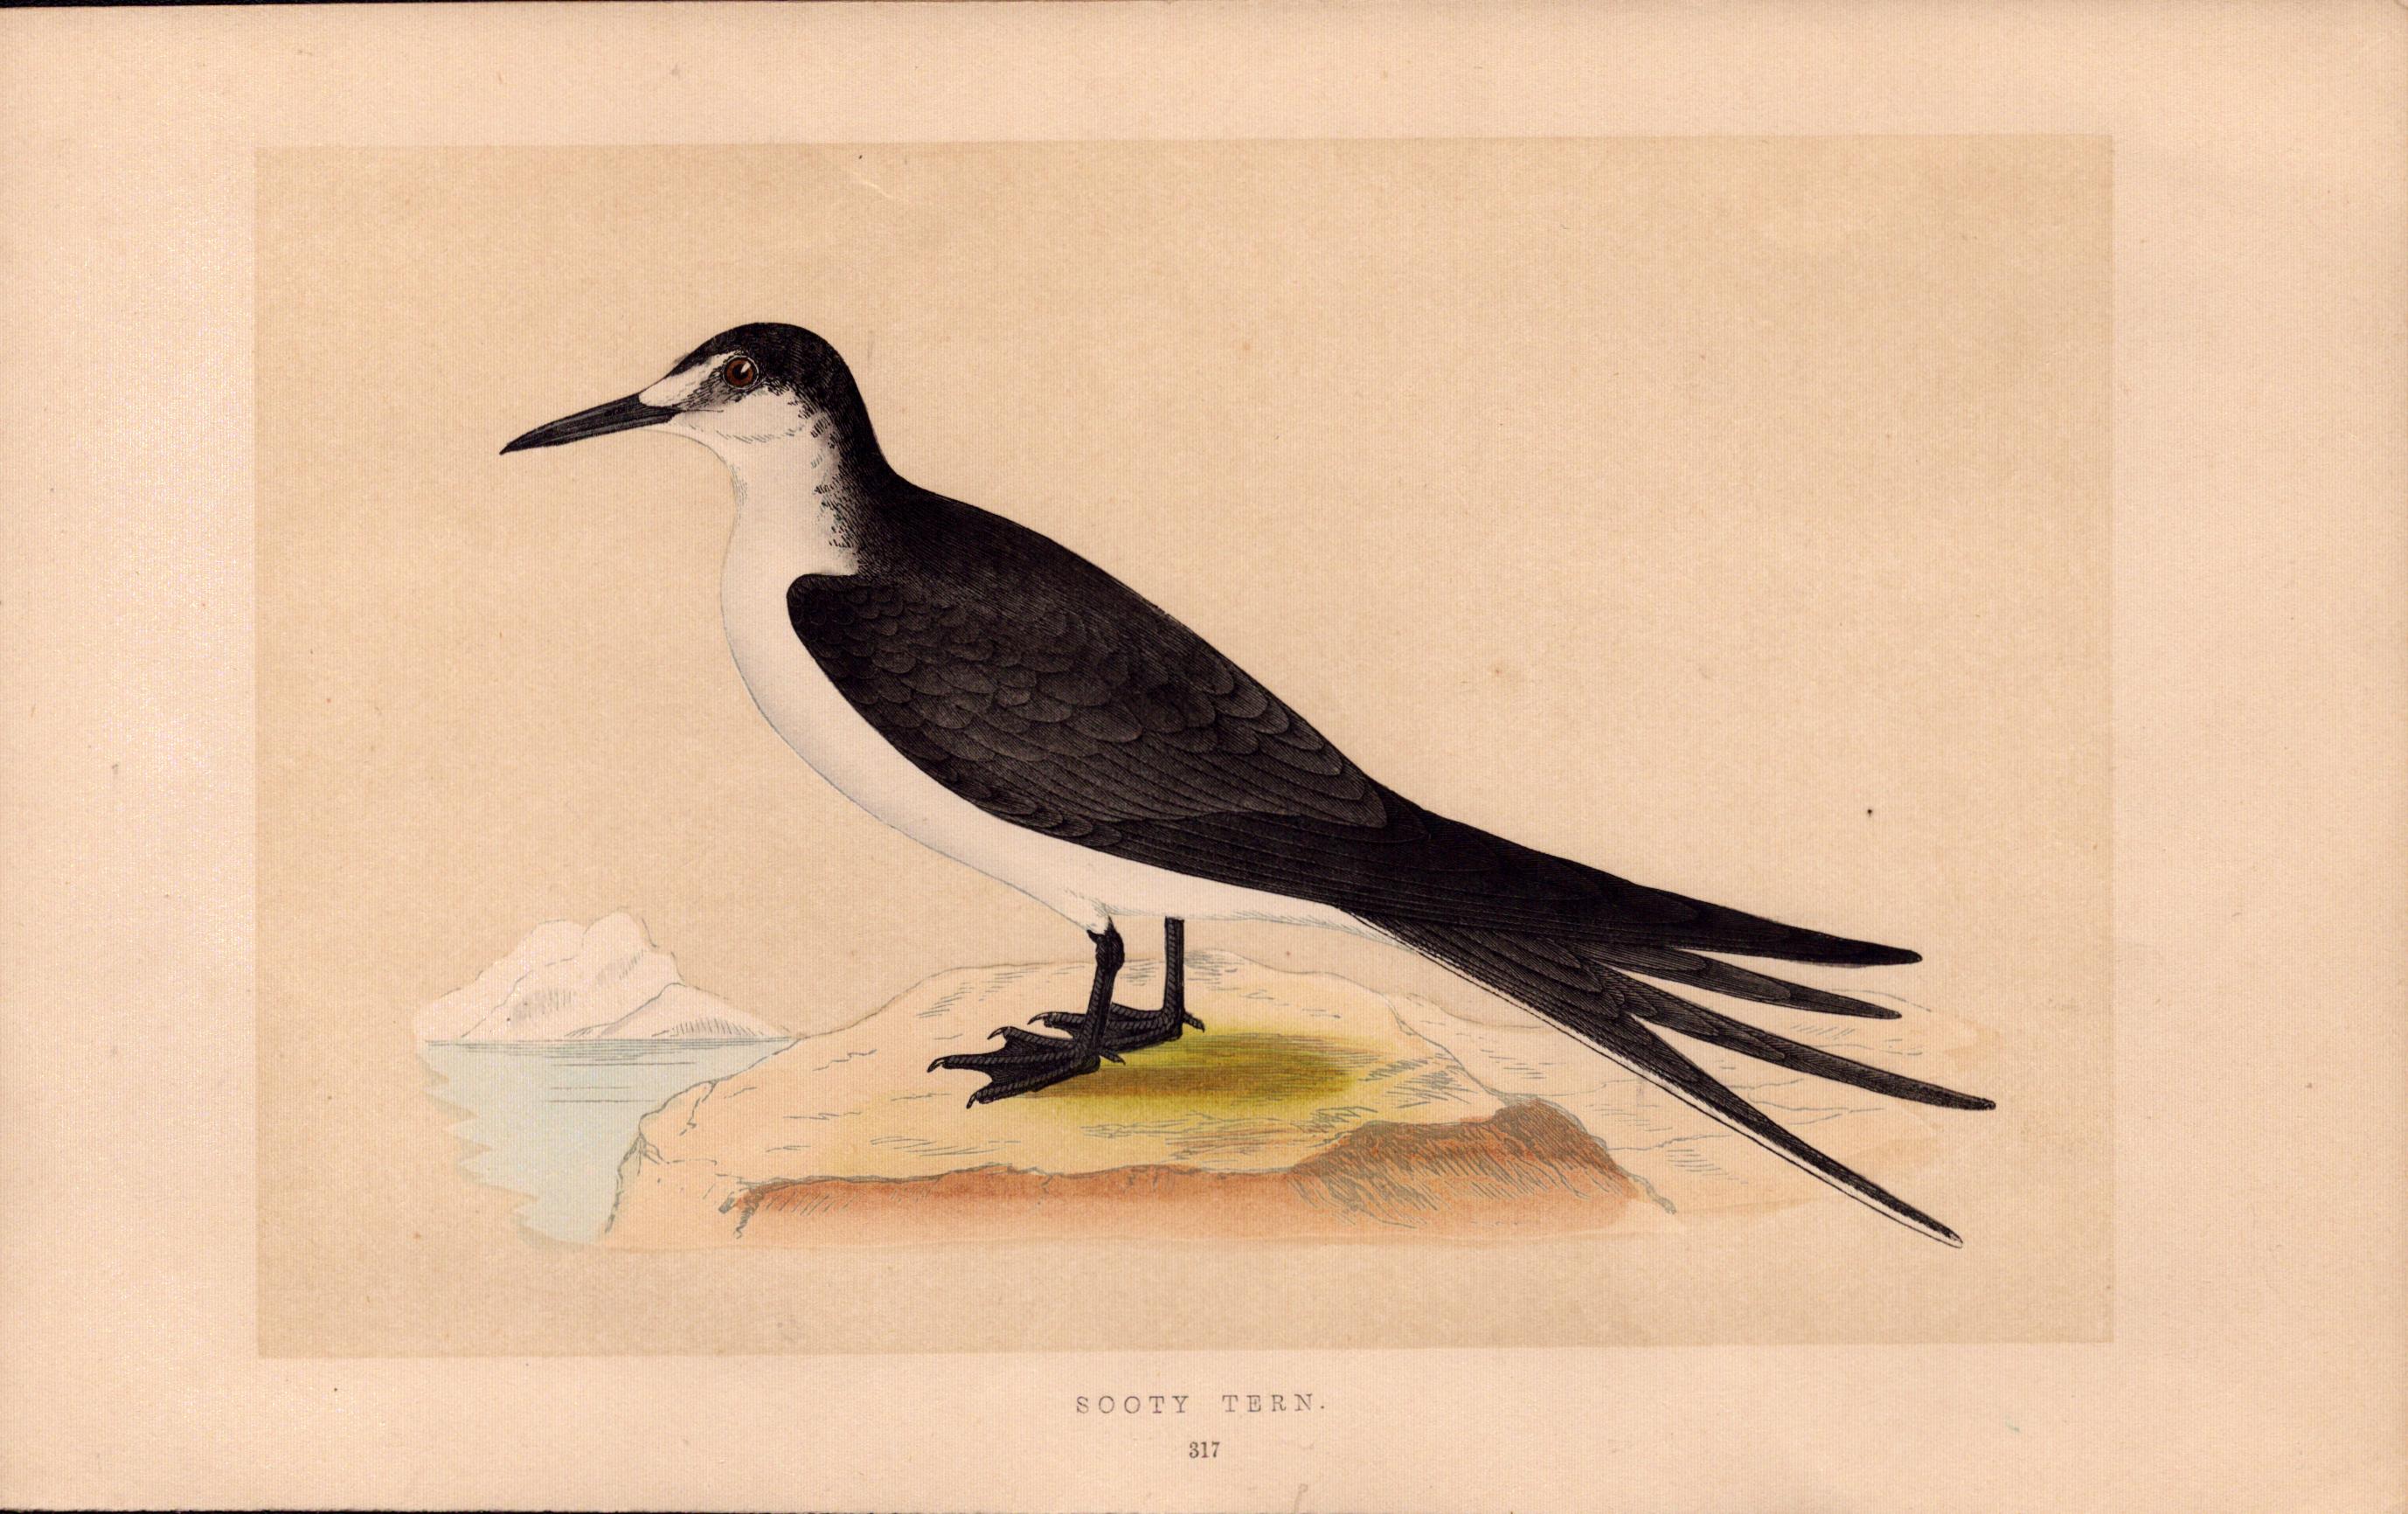 Sooty Tern Rev Morris Antique History of British Birds Engraving.